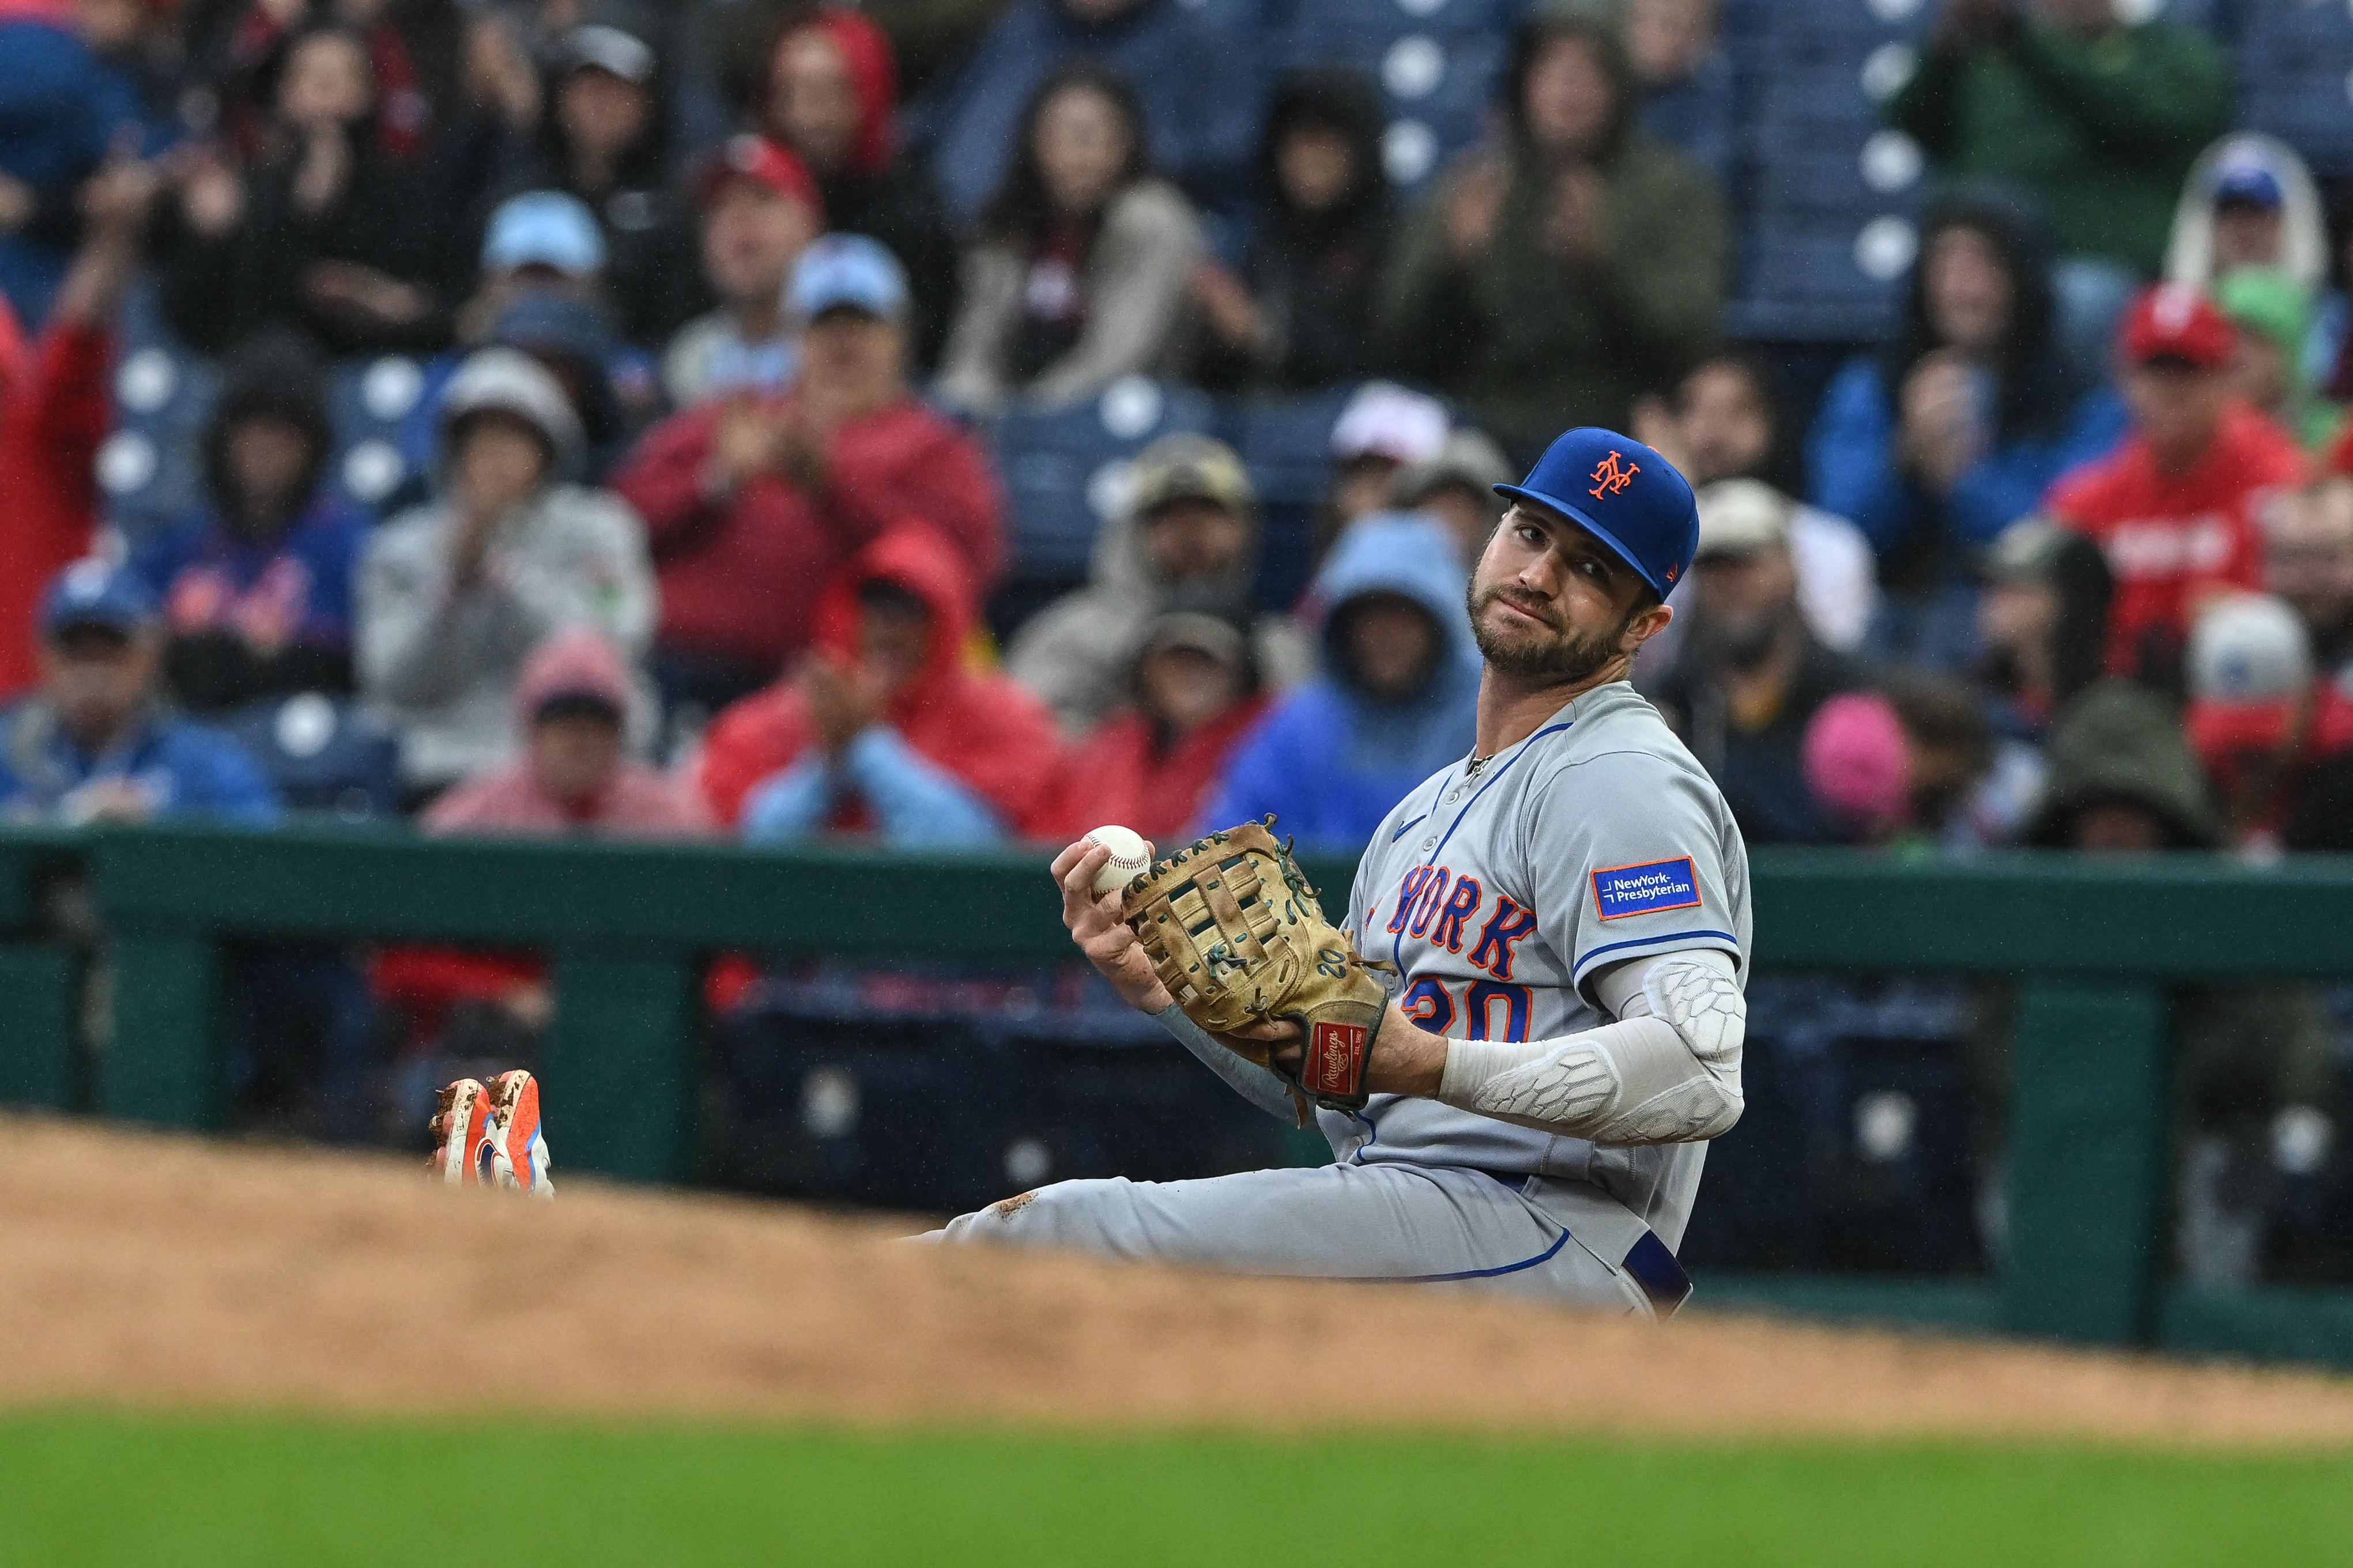 Press release: New York Mets announce multiyear partnership with NewYork- Presbyterian